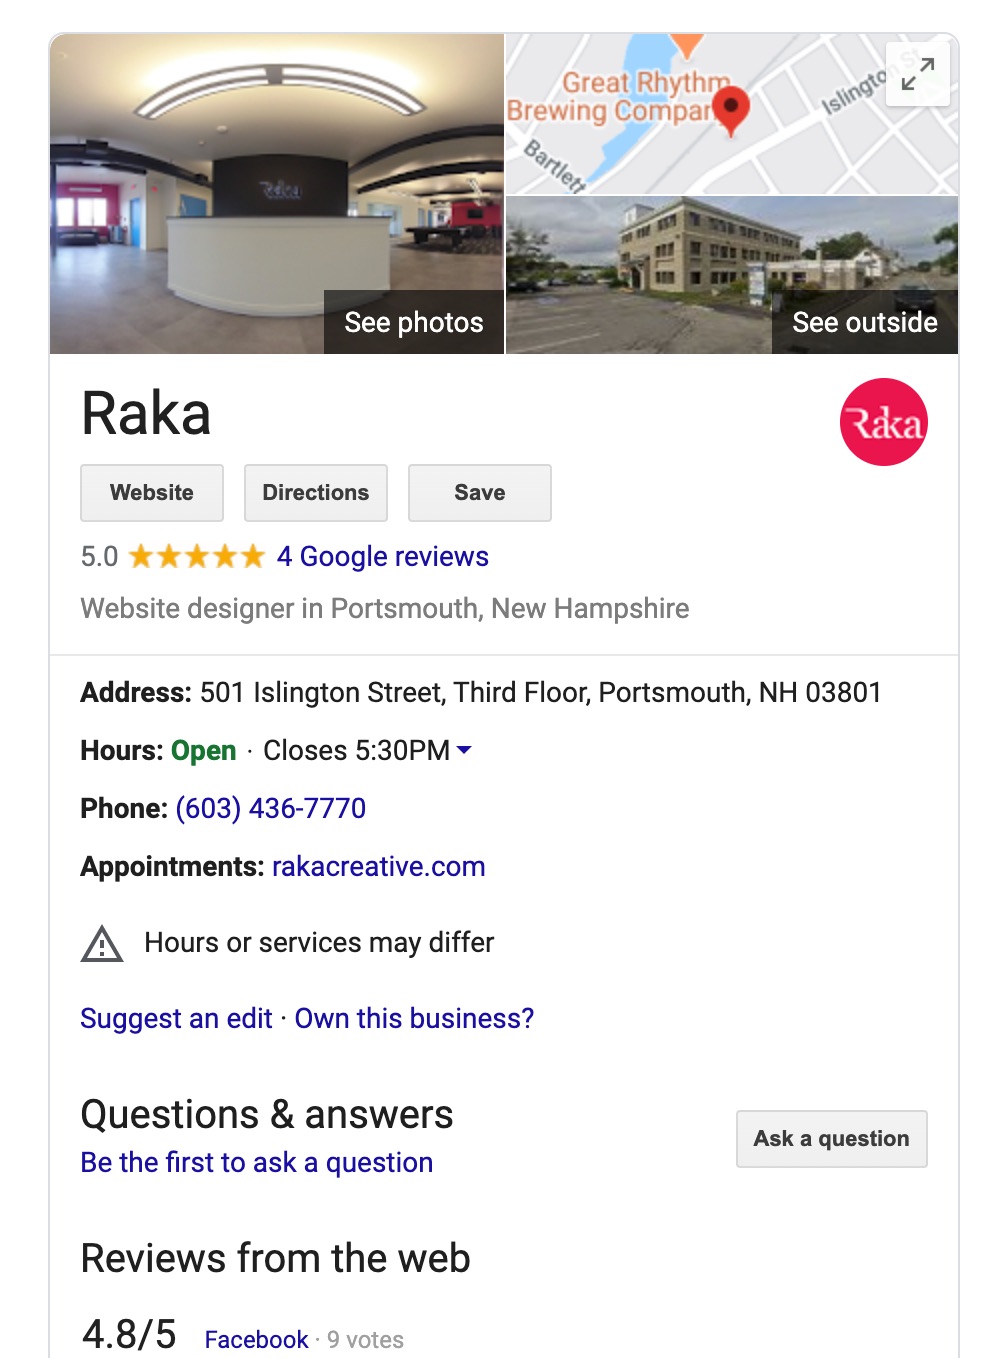 Google SERP Knowledge Graph Showing Raka